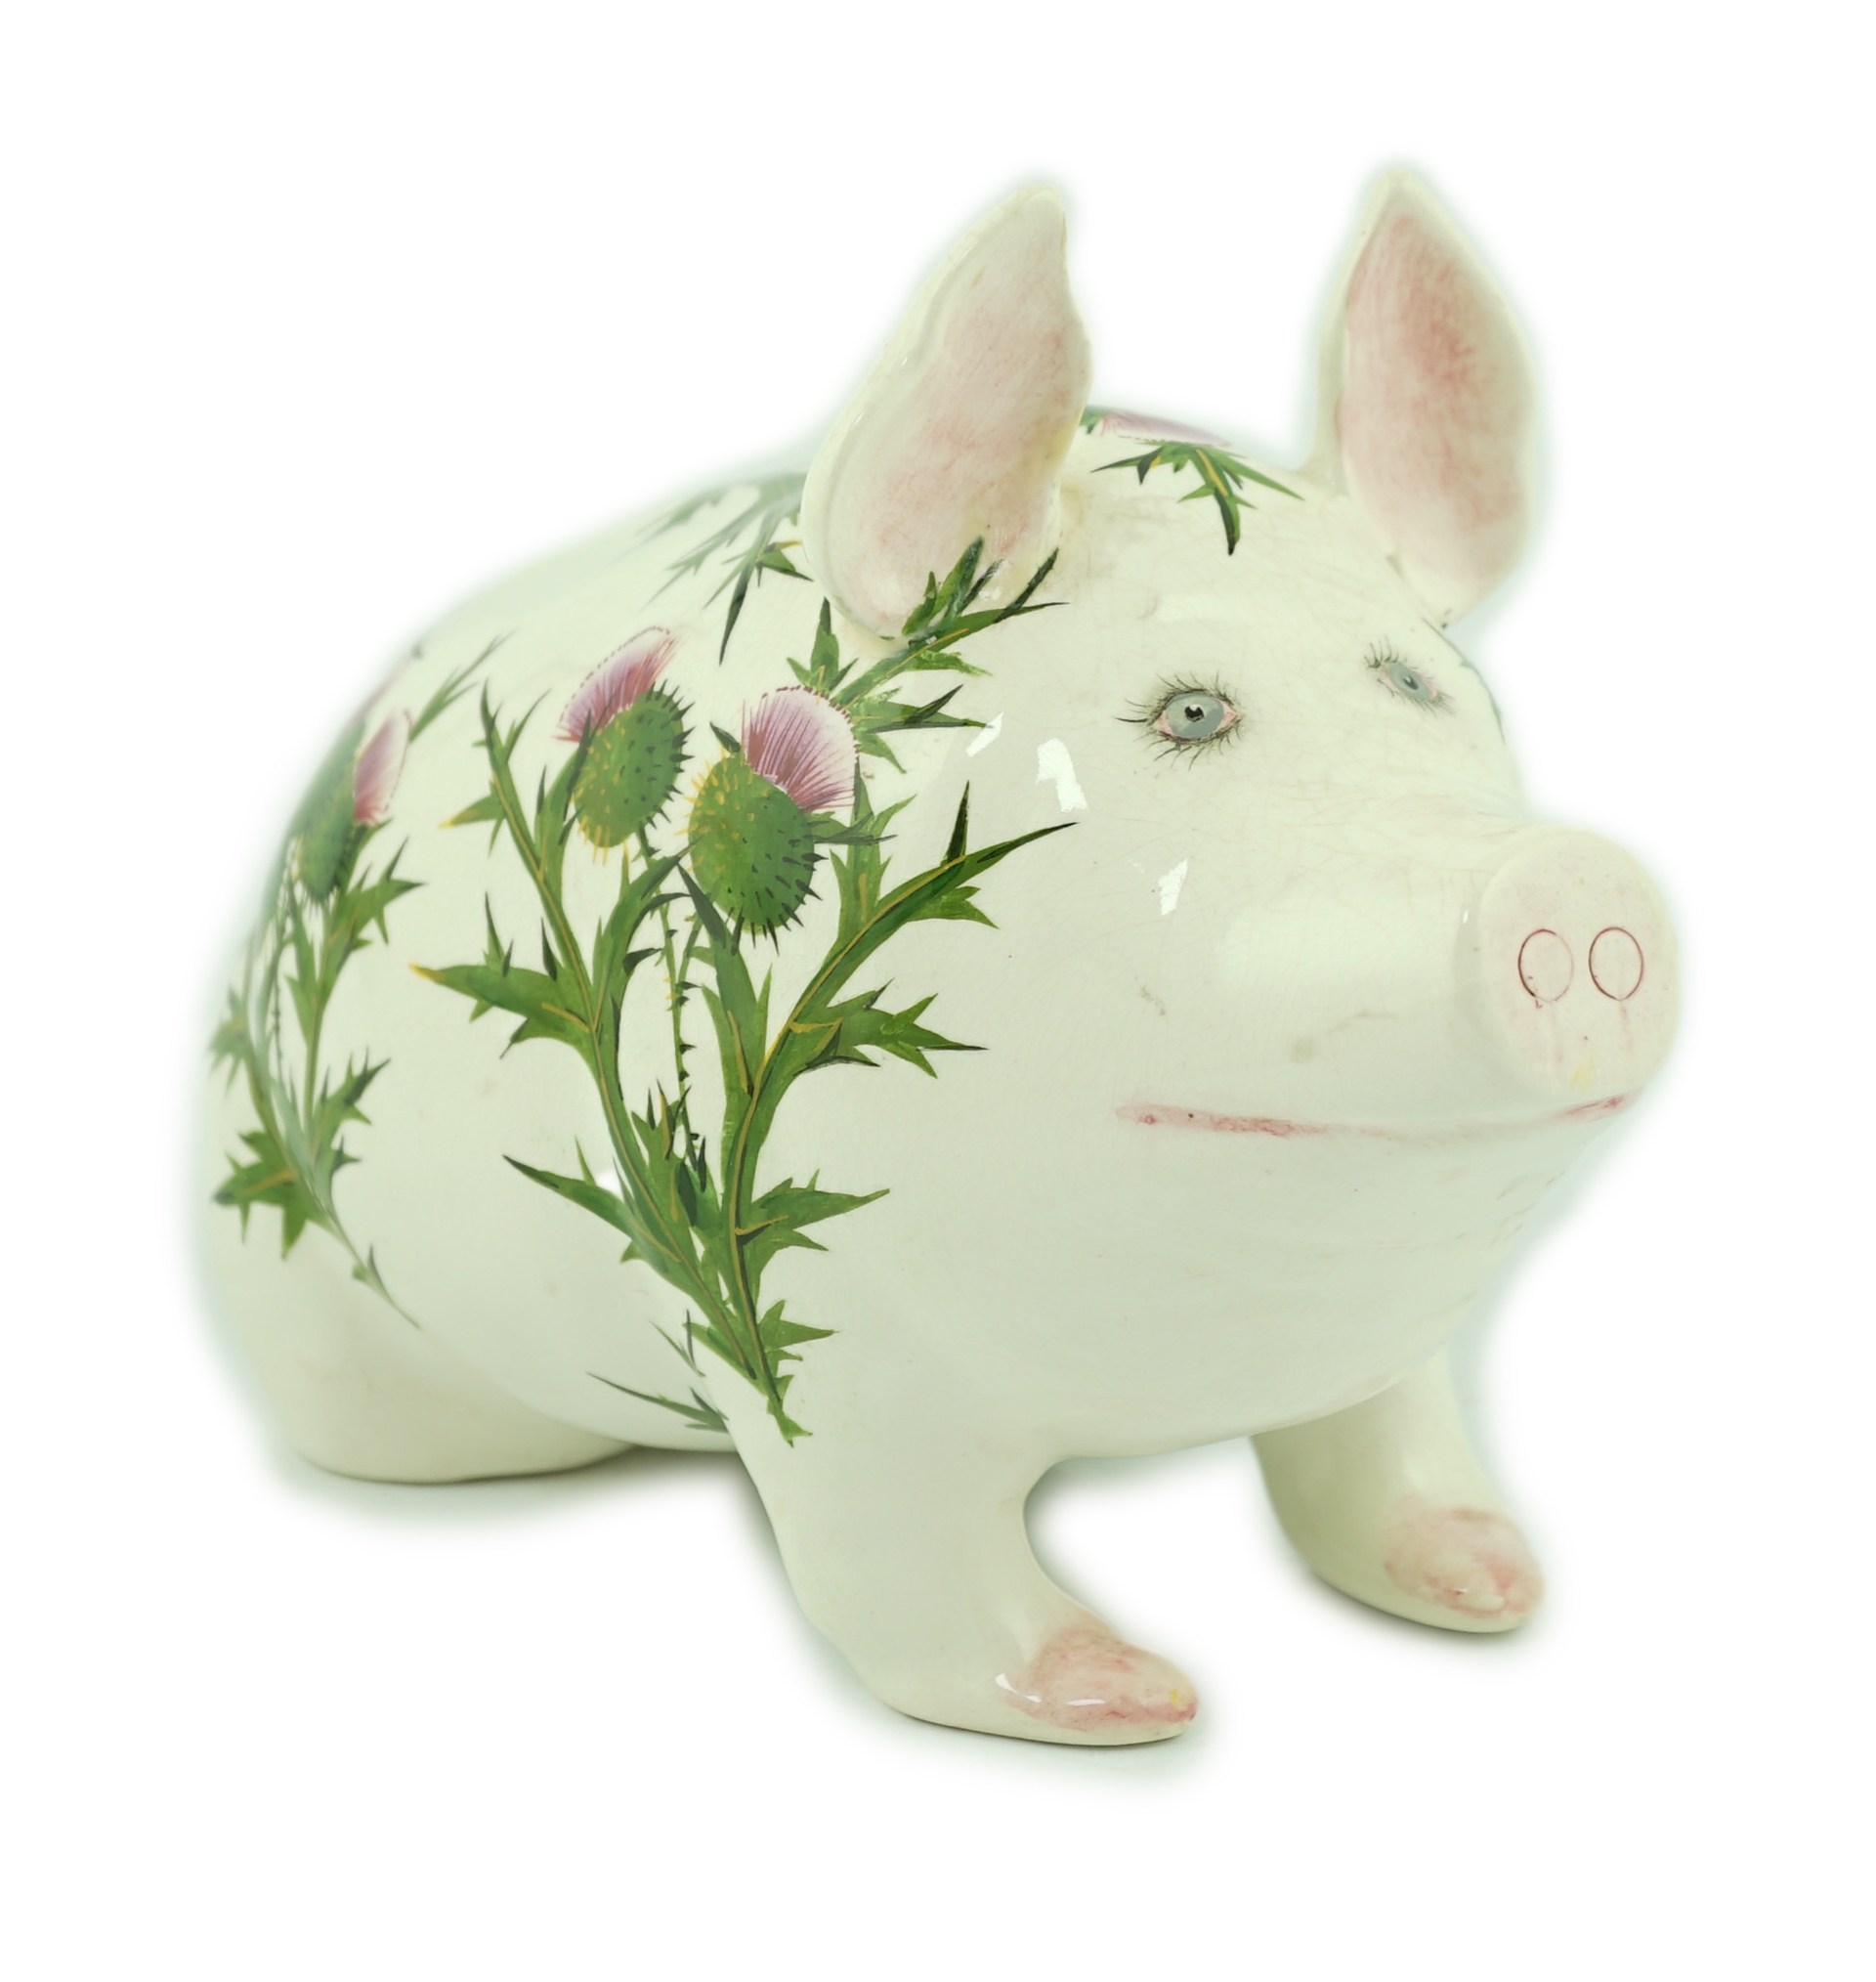 A Plichta ‘thistle’ pattern model of a pig, post 1930, painted by Joe Nekola                                                                                                                                                